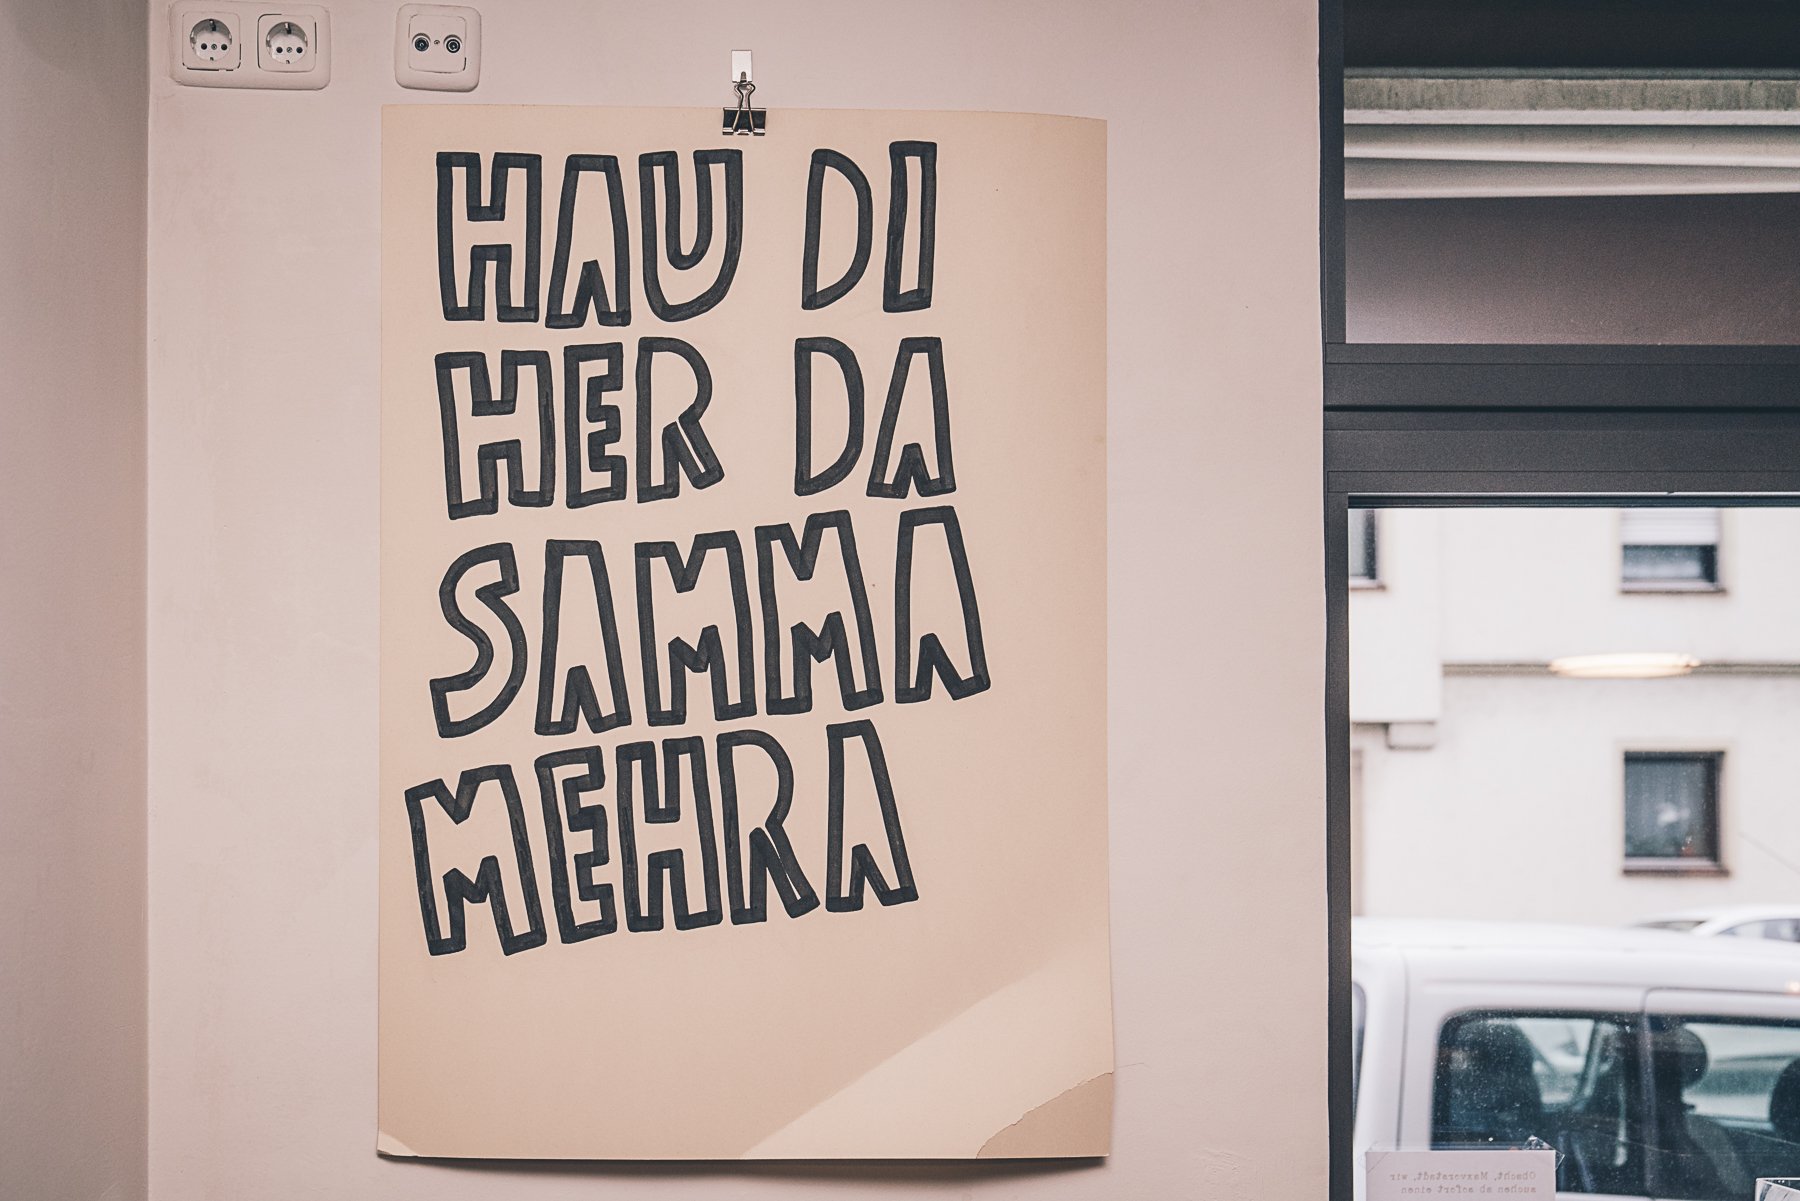 "Hau di her da, samma mehra!" says it all. – ©wunderland media GmbH